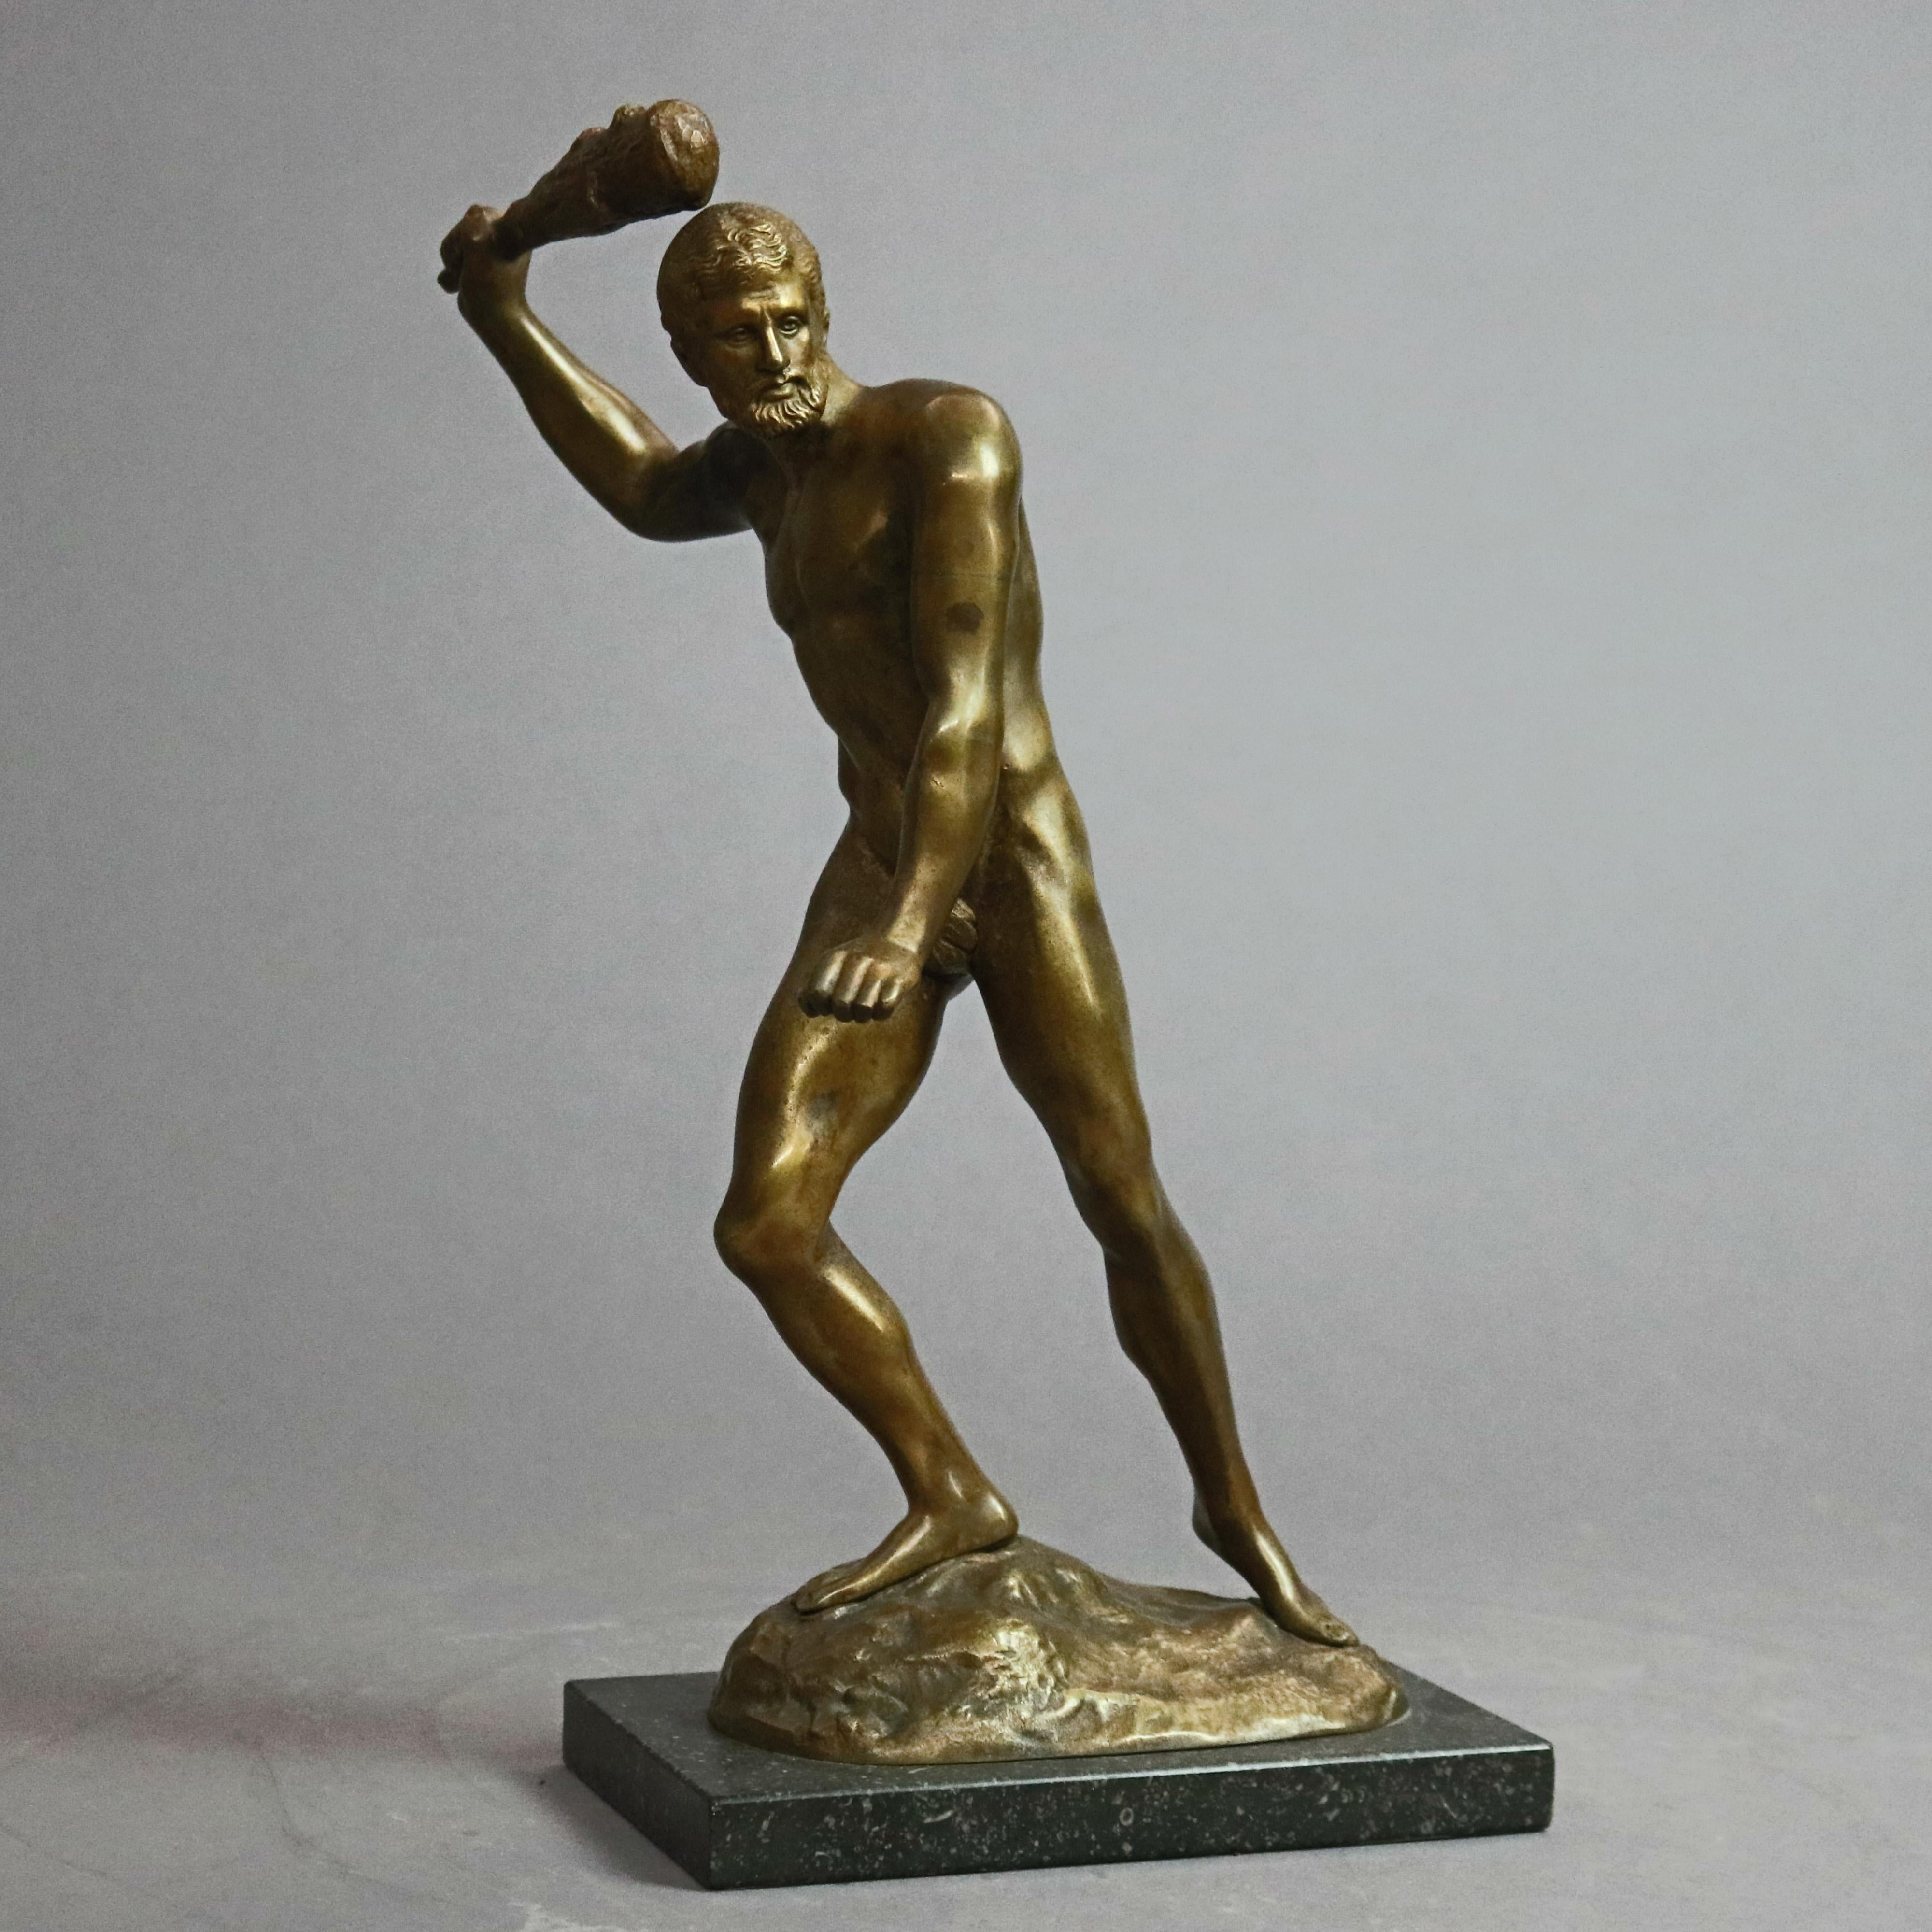 An antique cast bronze sculpture depicts male figure, gladiator, 19th century

Measures - 15